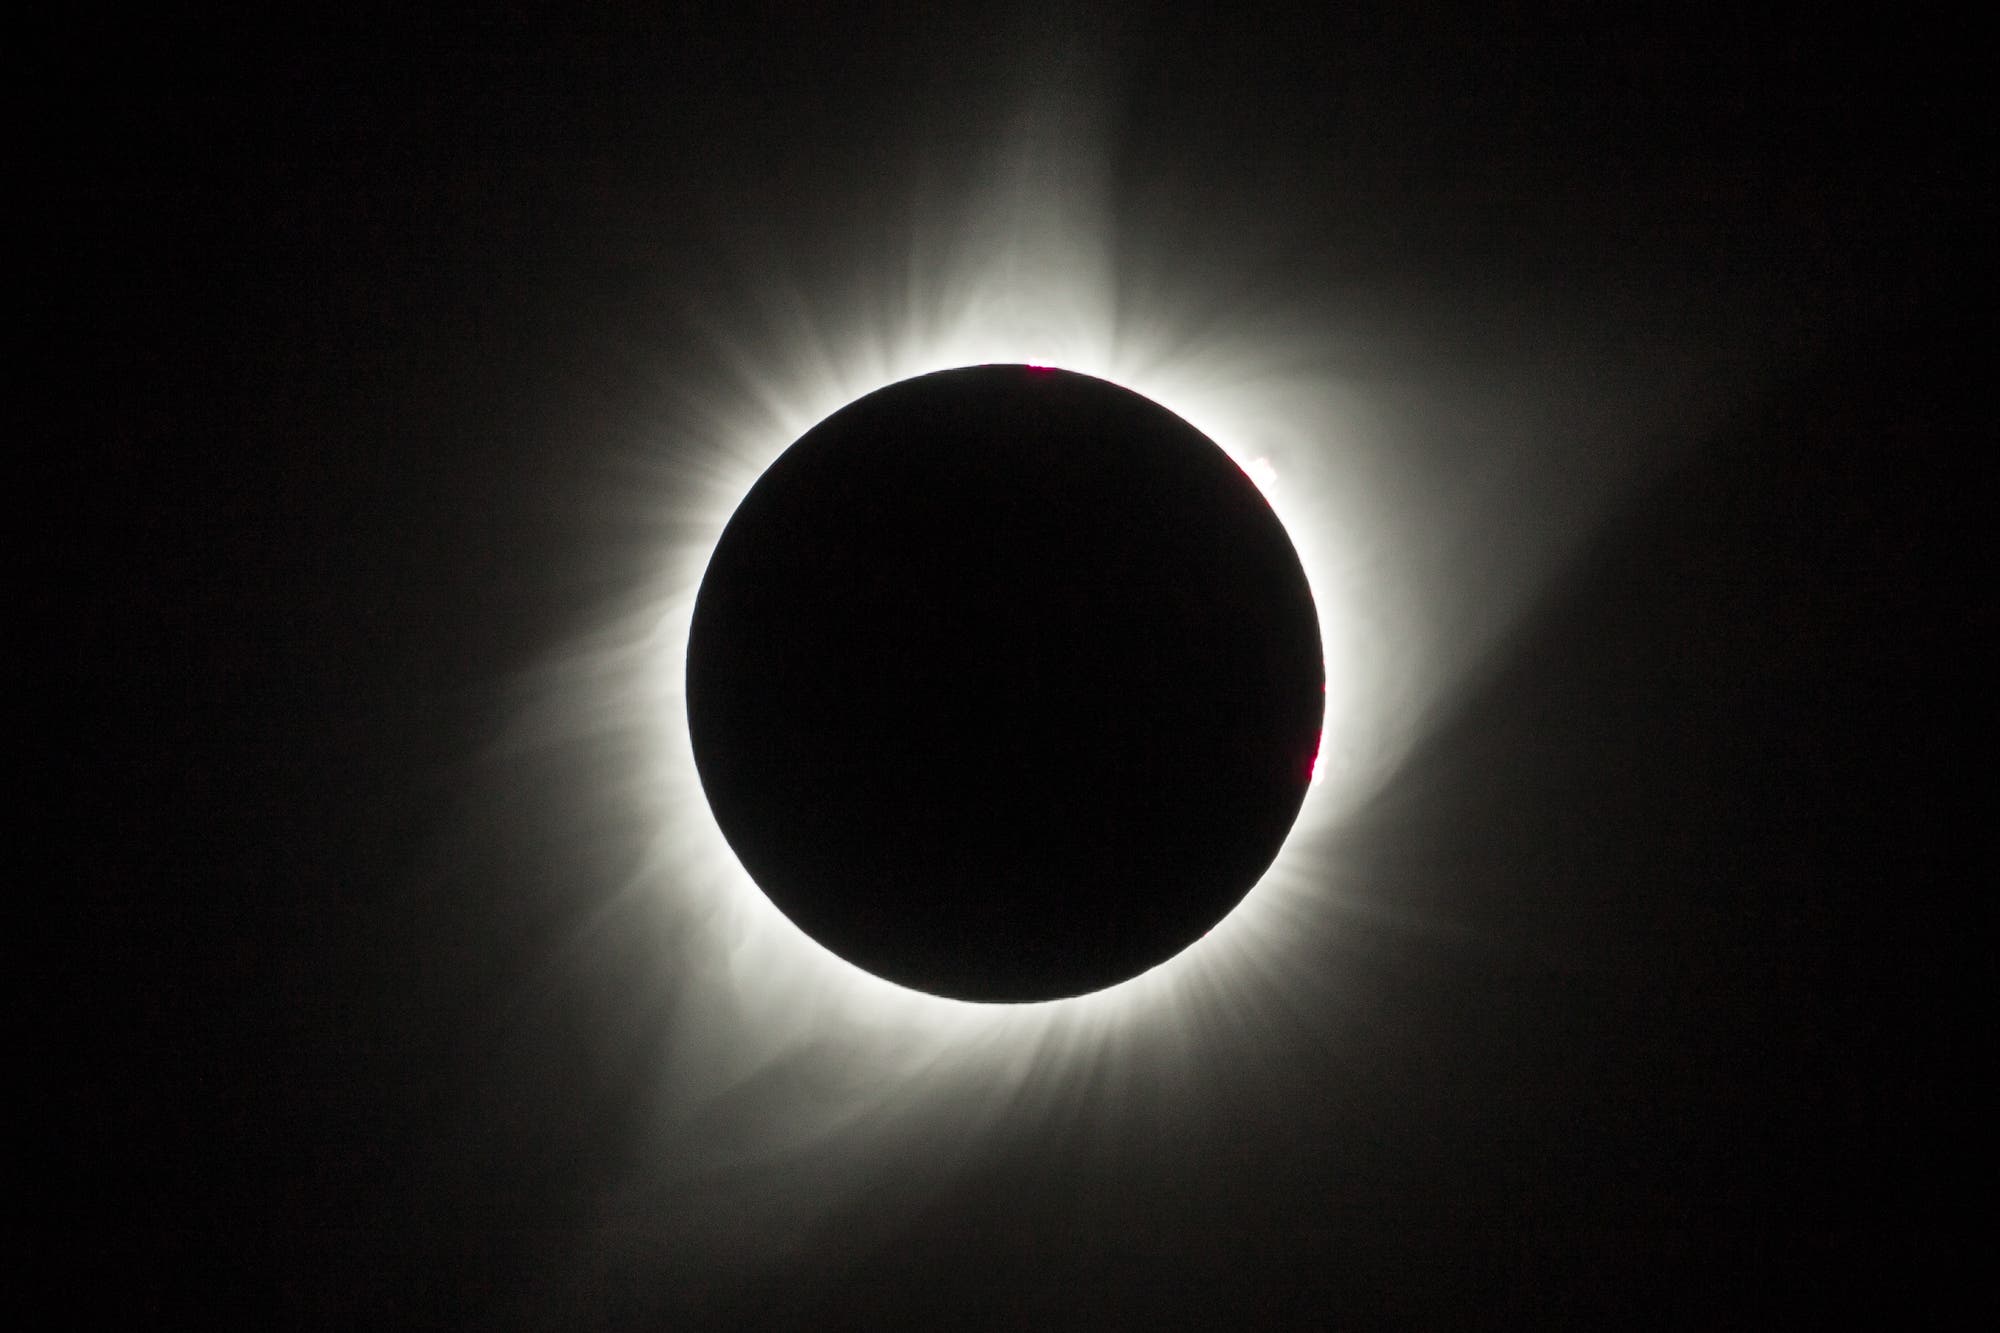 Korona der totalen Sonnenfinsternis 2017